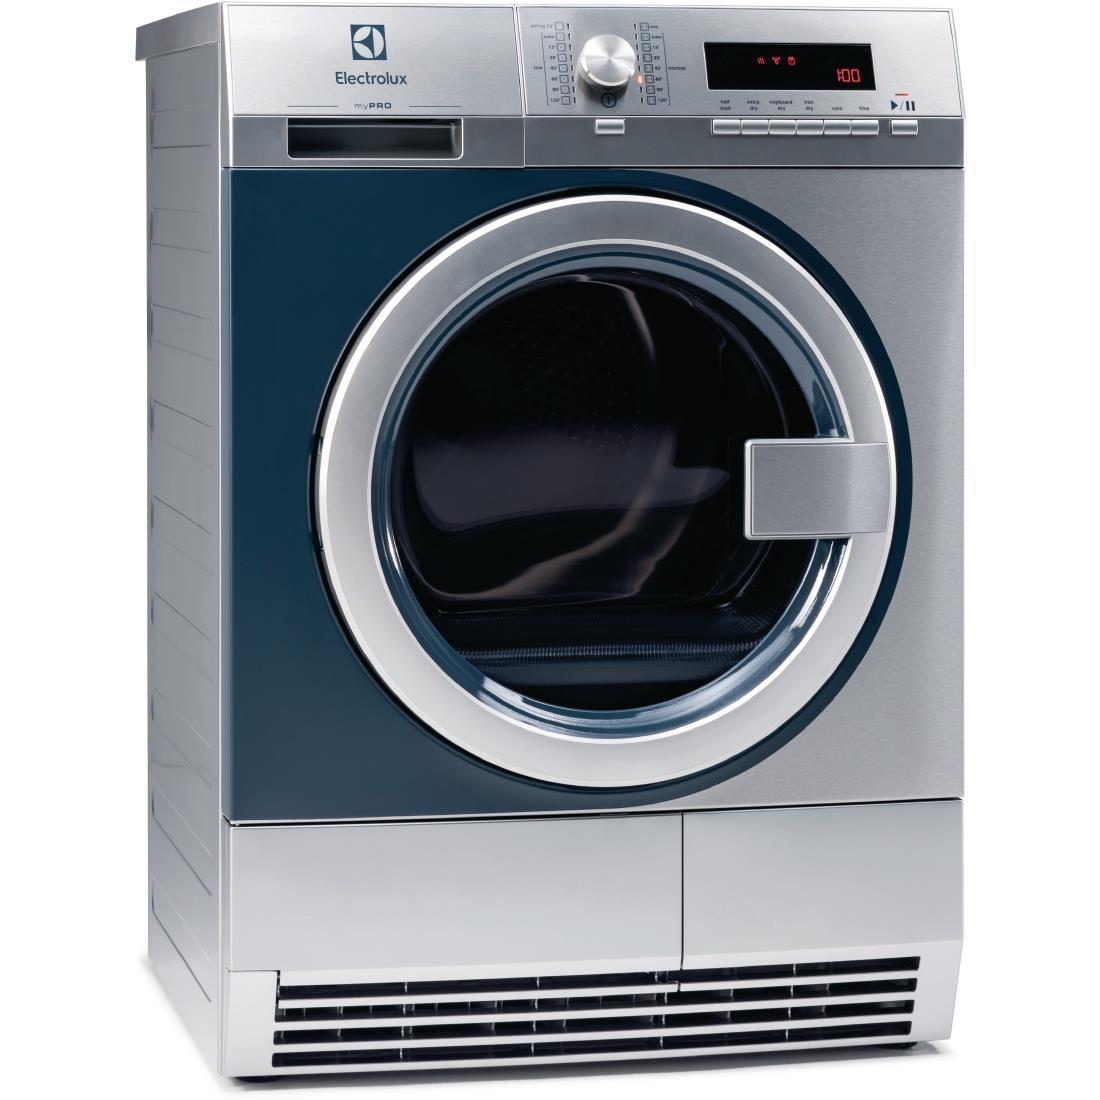 Electrolux myPRO Commercial Tumble Dryer TE1120 - CK376  - 3